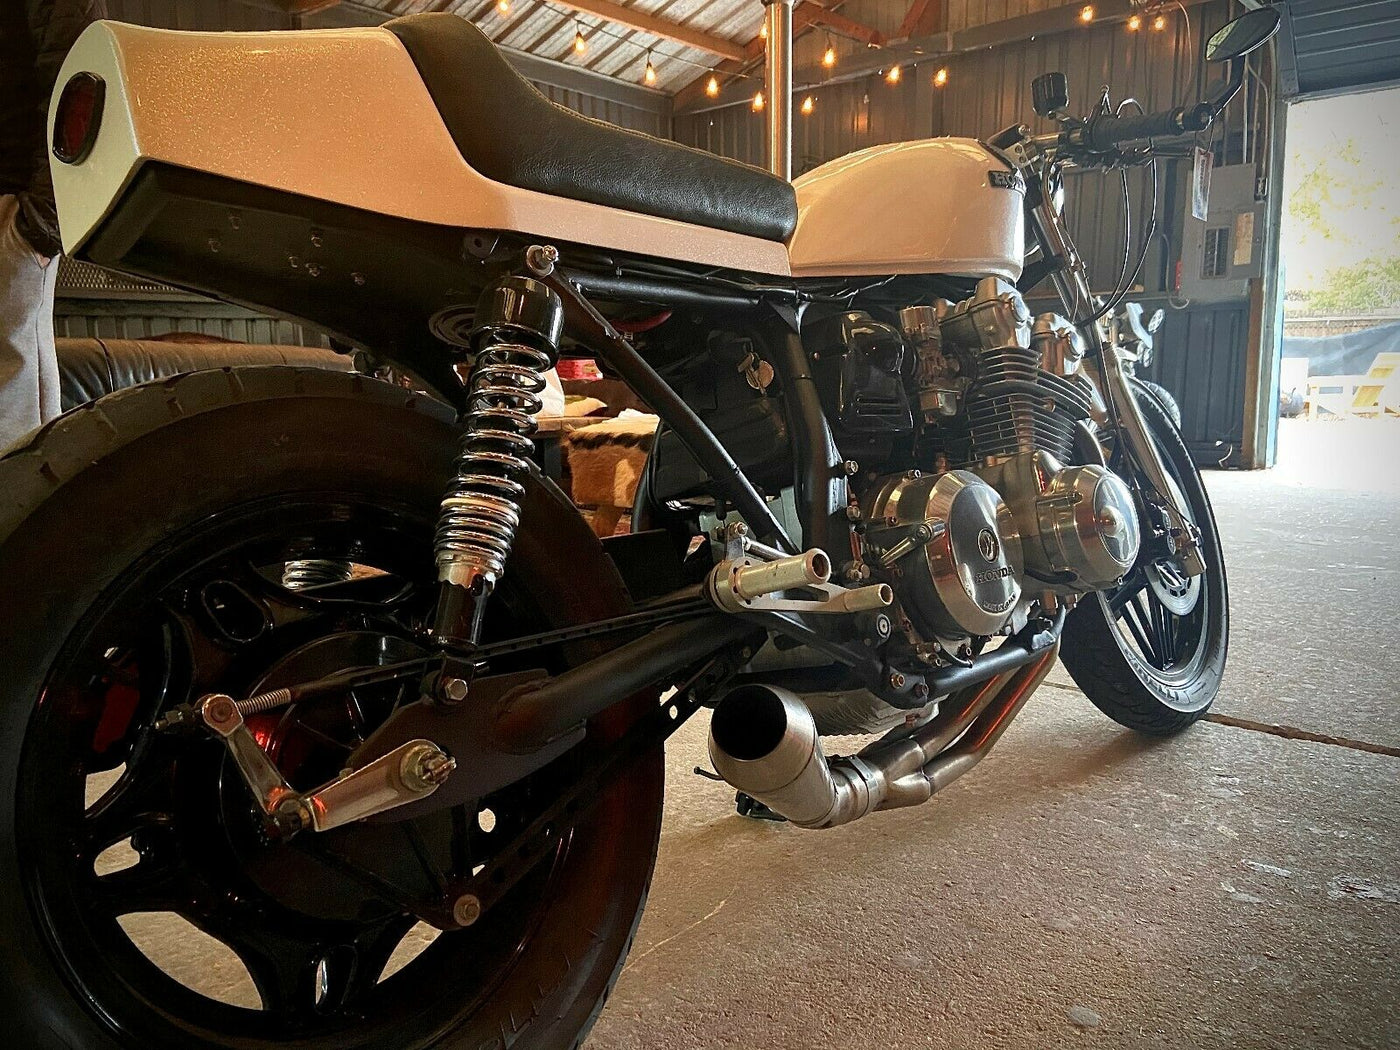 1981 Honda CB750 Motorcycle